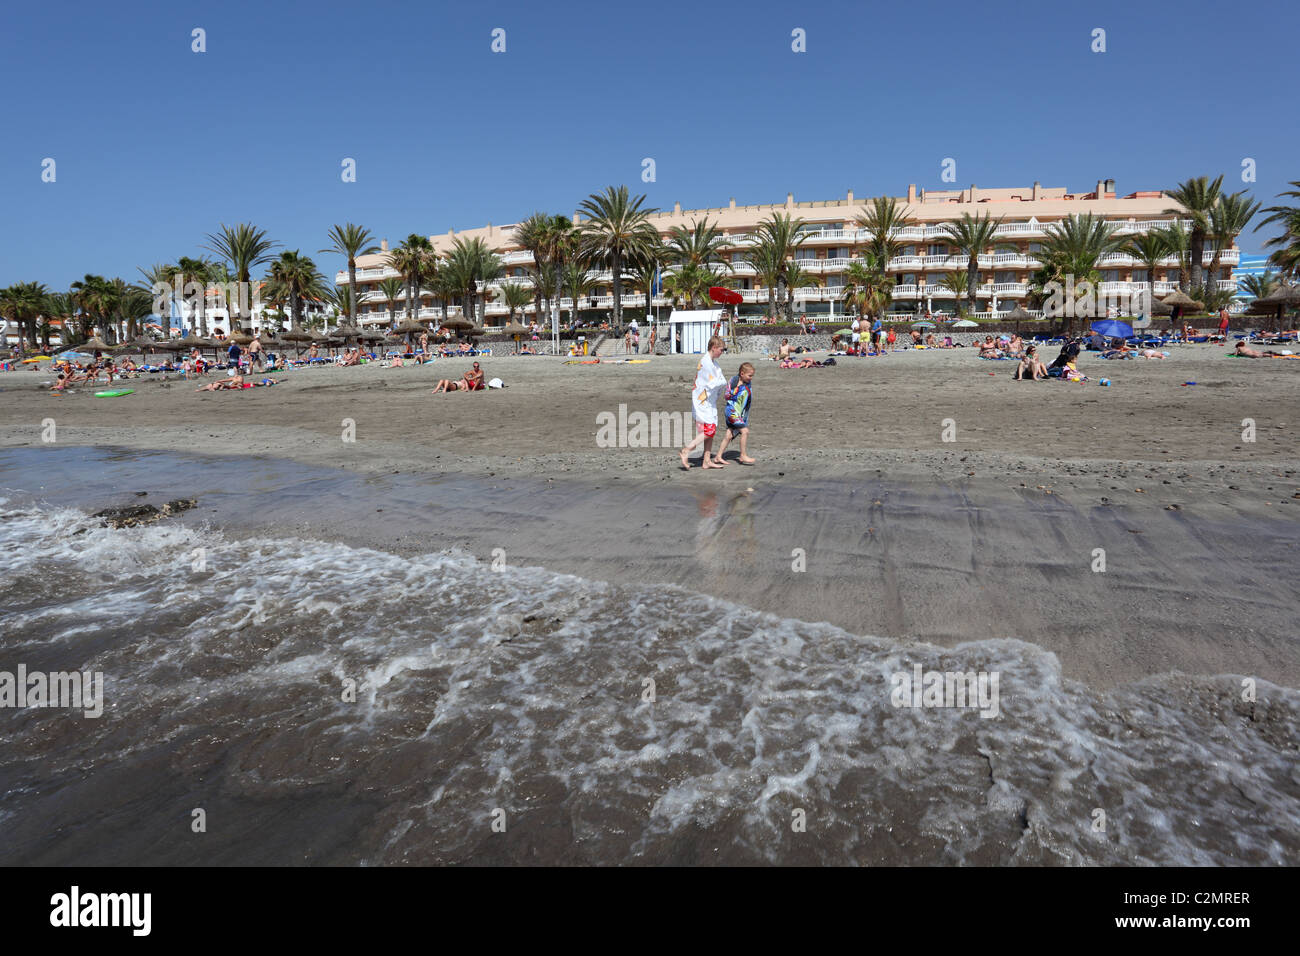 Playa de las Americas beach, Canary Island Tenerife, Spain Stock Photo